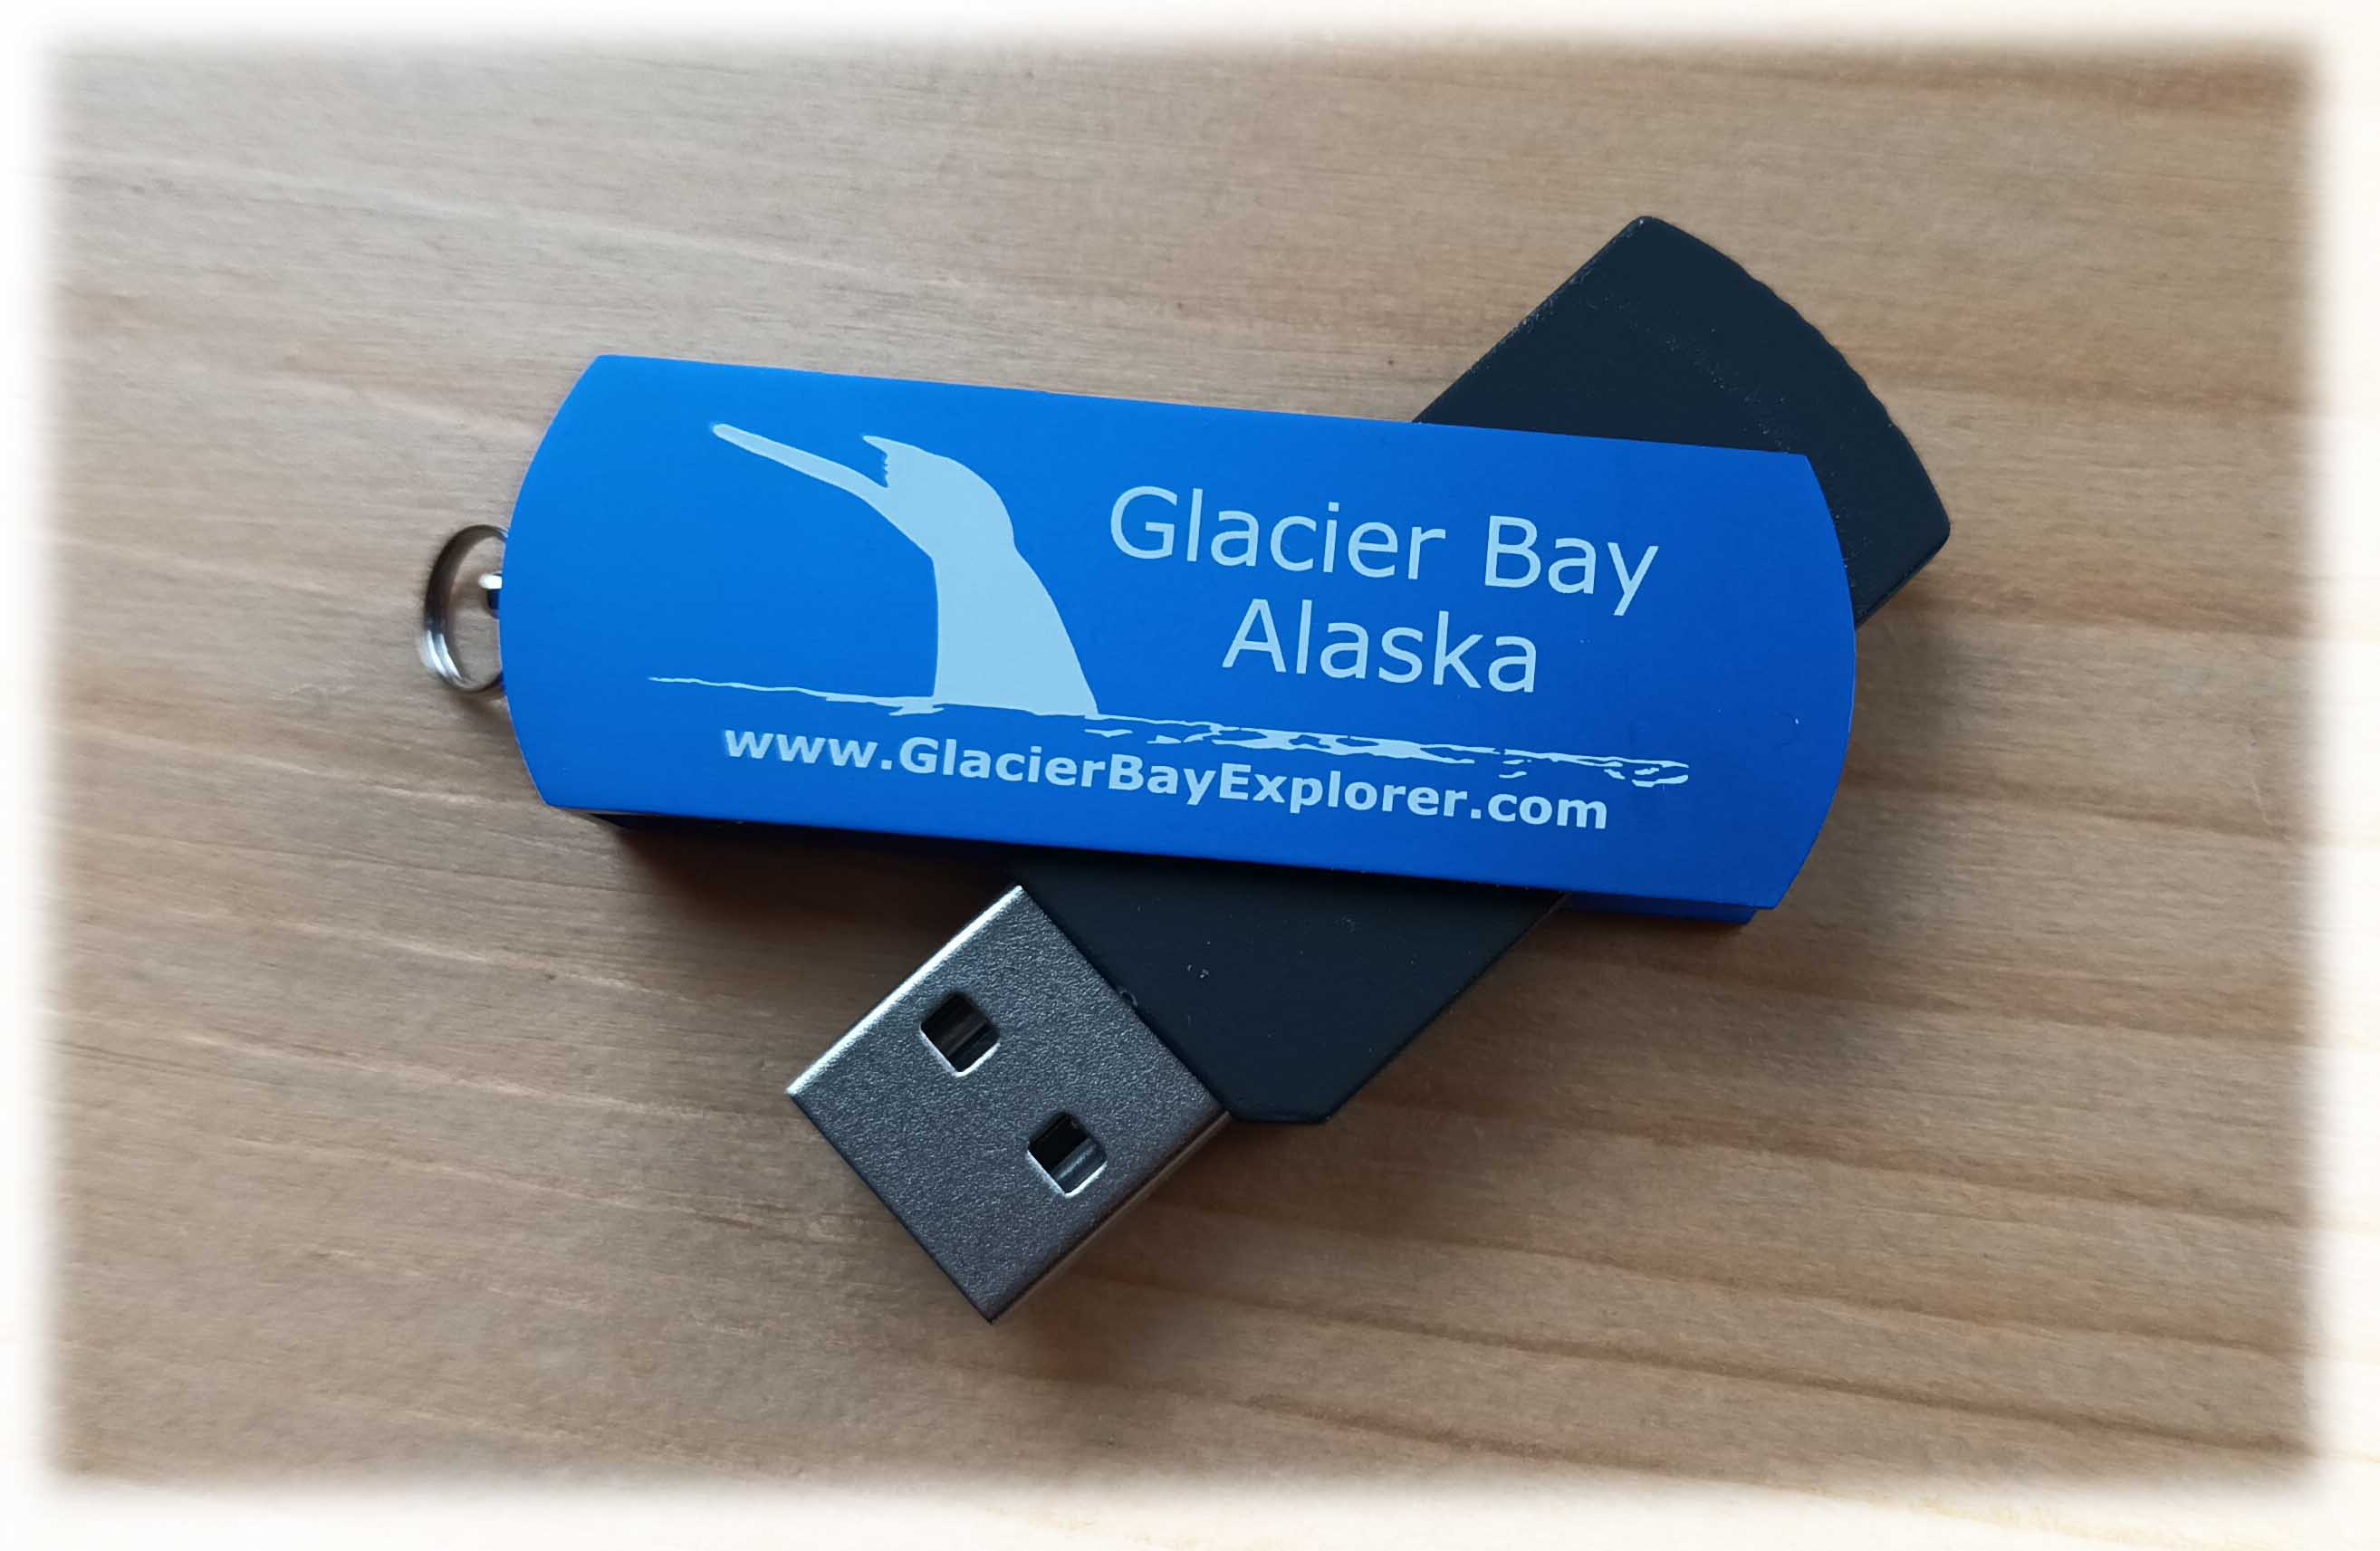 Glacier Bay Explorer flashdrive